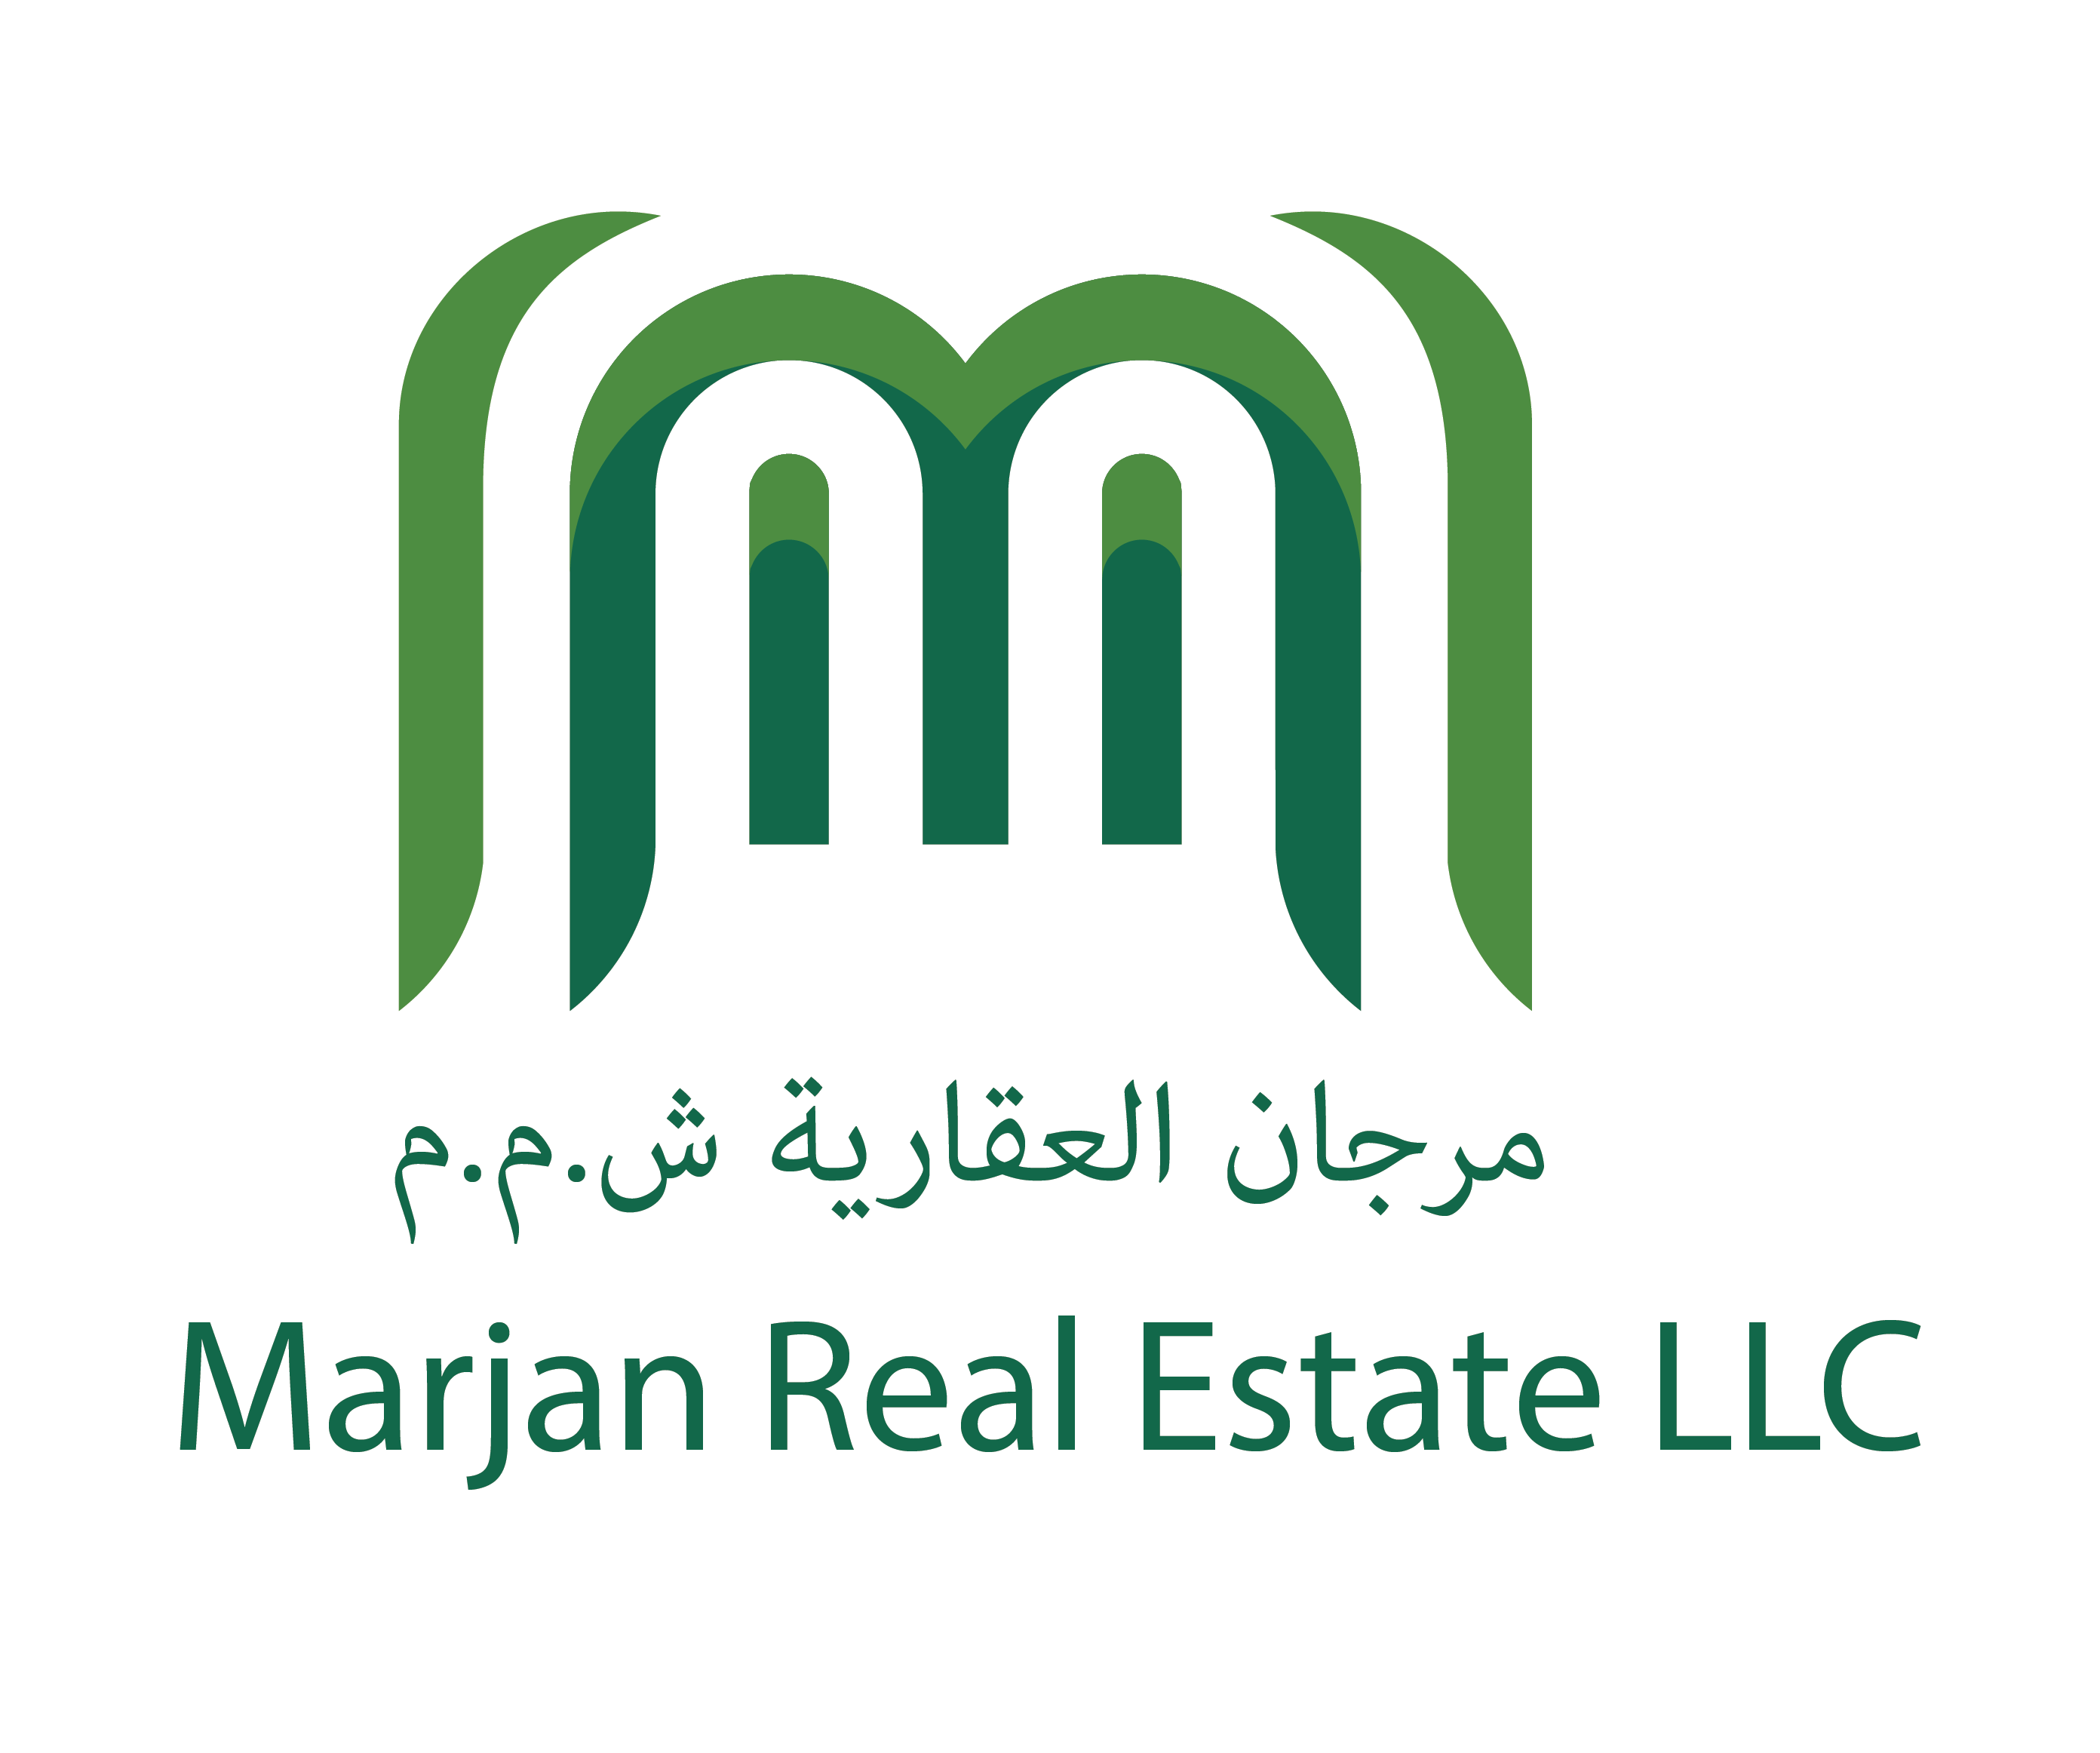 Marjan Real Estate LLC